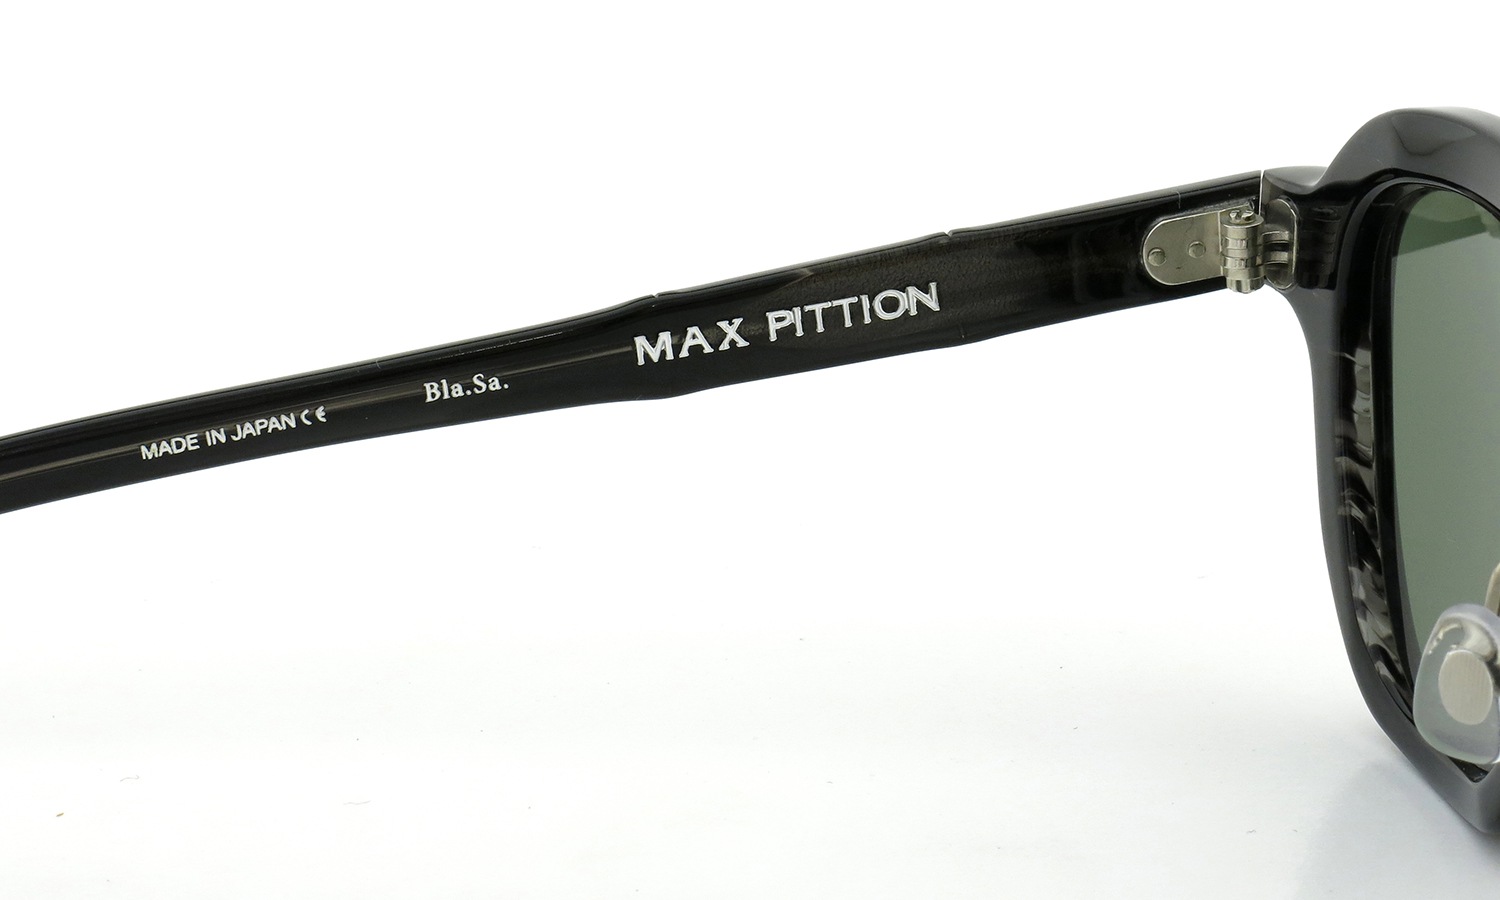 MAX PITTION Bronson 44size Bla.Sa. Lense:G15